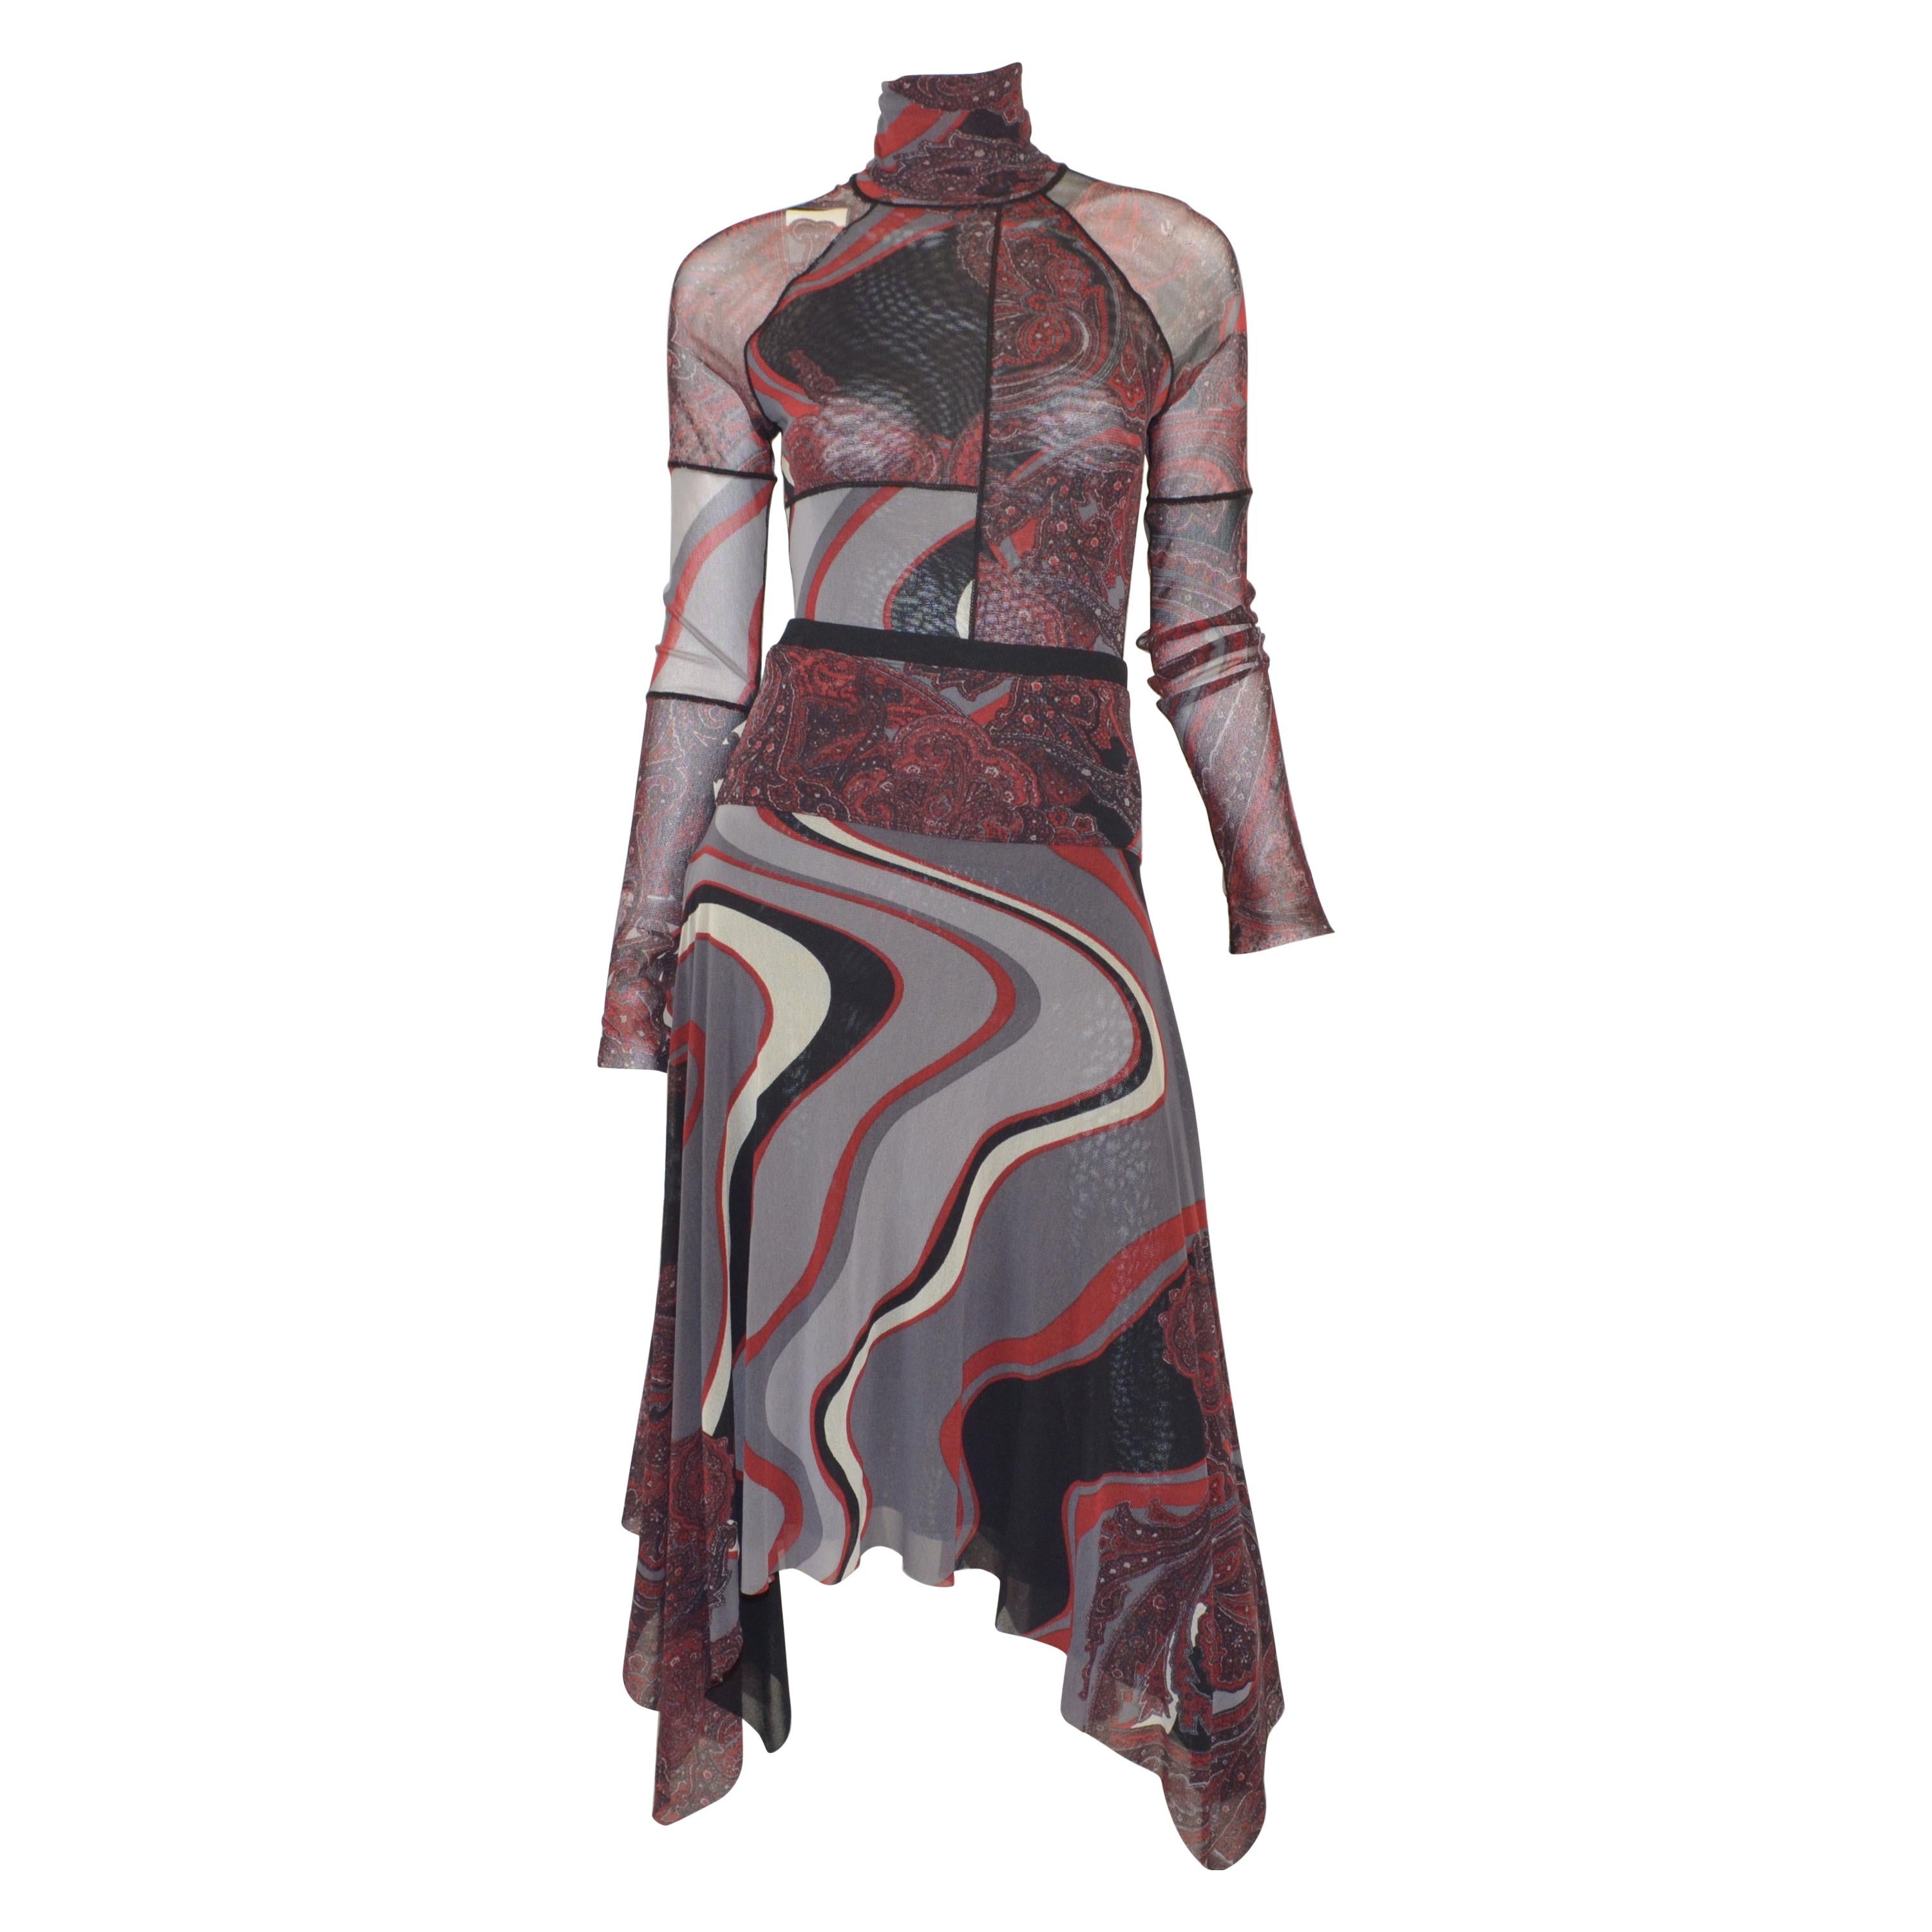 Jean Paul Gaultier Mixed Print Mesh Top and Skirt Set